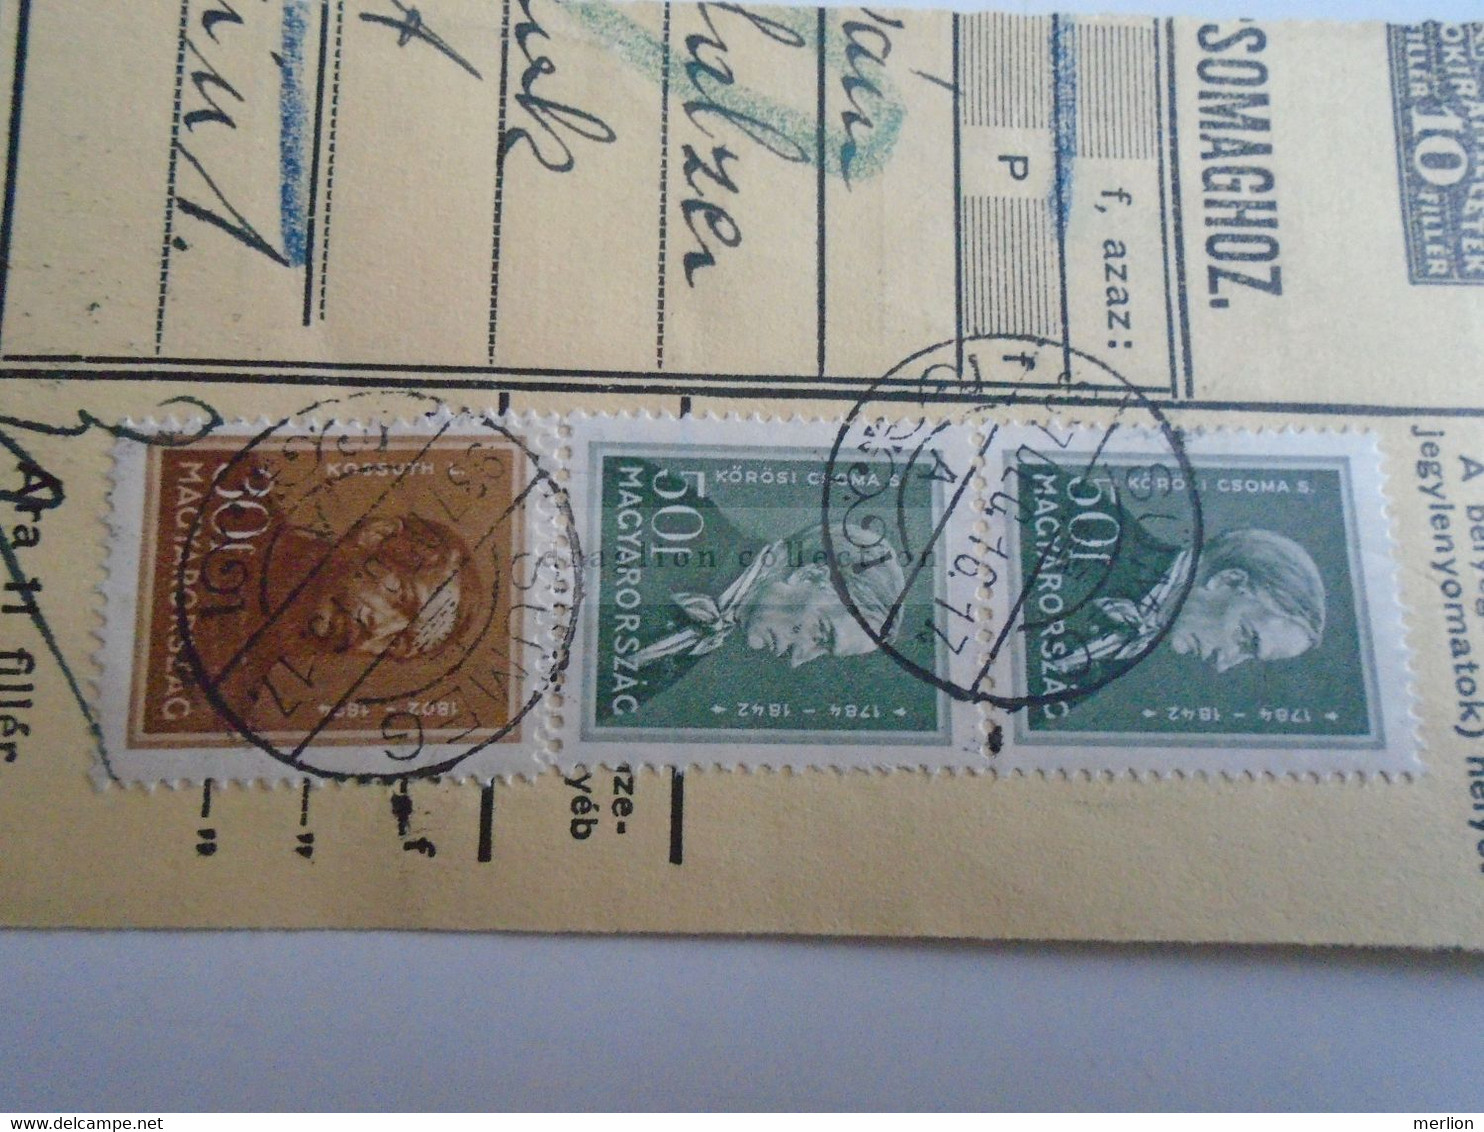 D187440    Parcel Card  (cut) Hungary 1937  SÜMEG- Budapest - Paketmarken